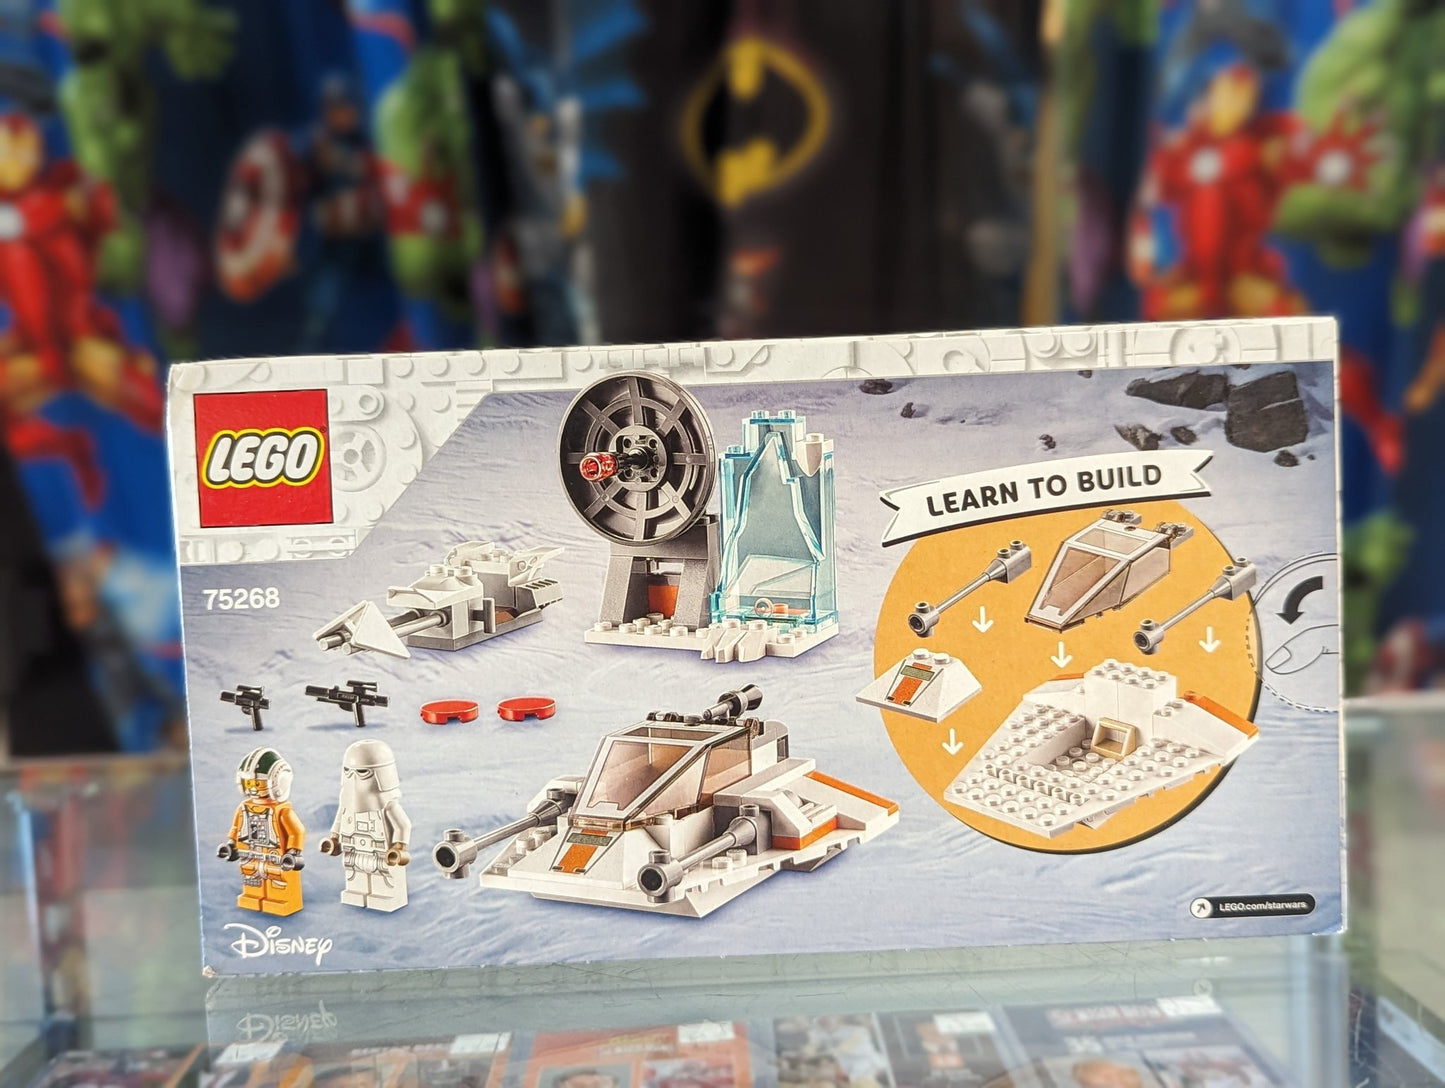 Lego 75268 Star Wars Snowspeeder - Covert Comics and Collectibles